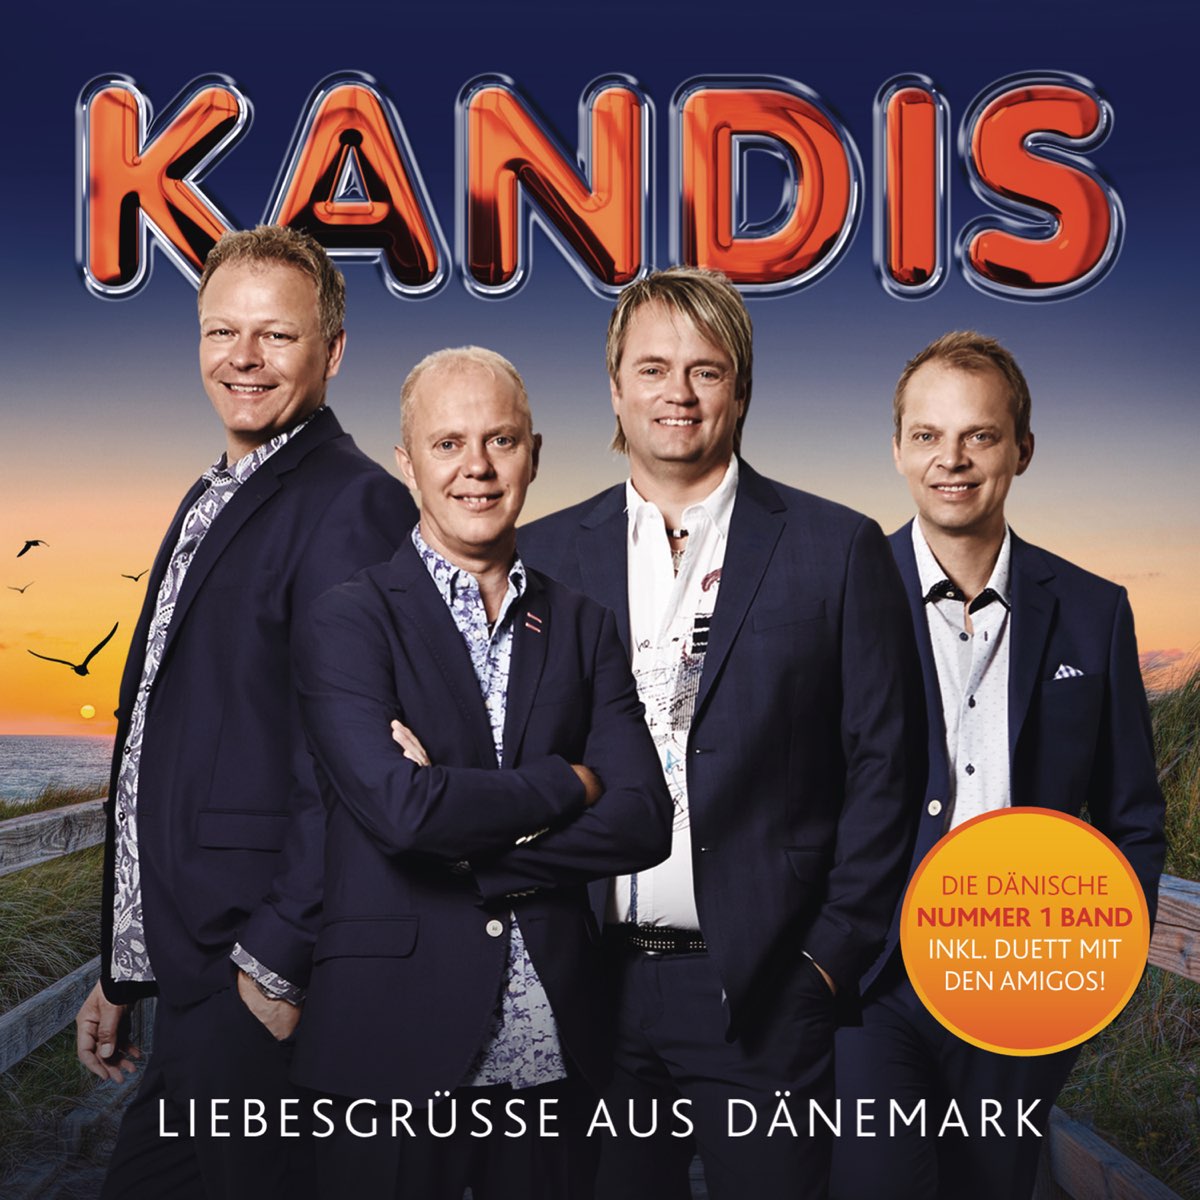 Liebesgrüße aus Dänemark by Kandis on Apple Music